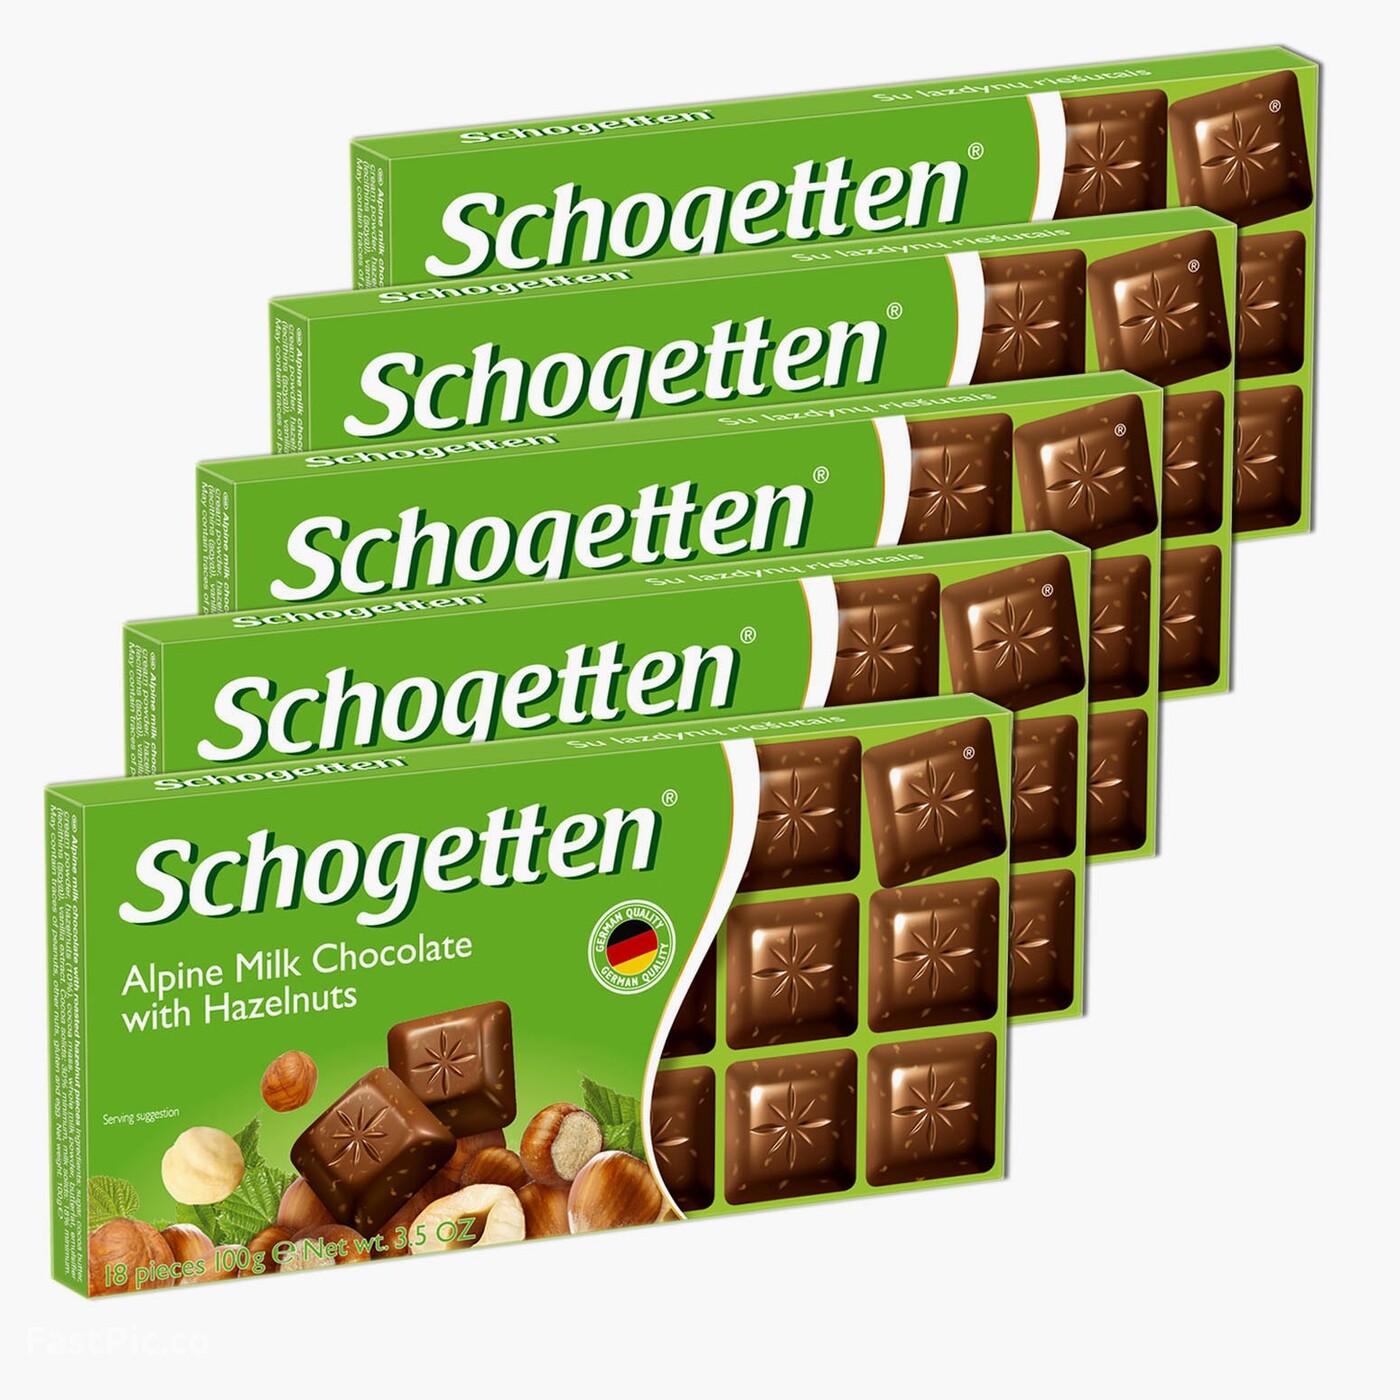 Немецкие шоколадки. Немецкий шоколад Schogetten. Немецкая шоколадка Schogetten. Немецкий молочный шоколад Schogetten. Шоколадка немецкая шоколадка Schogetten.